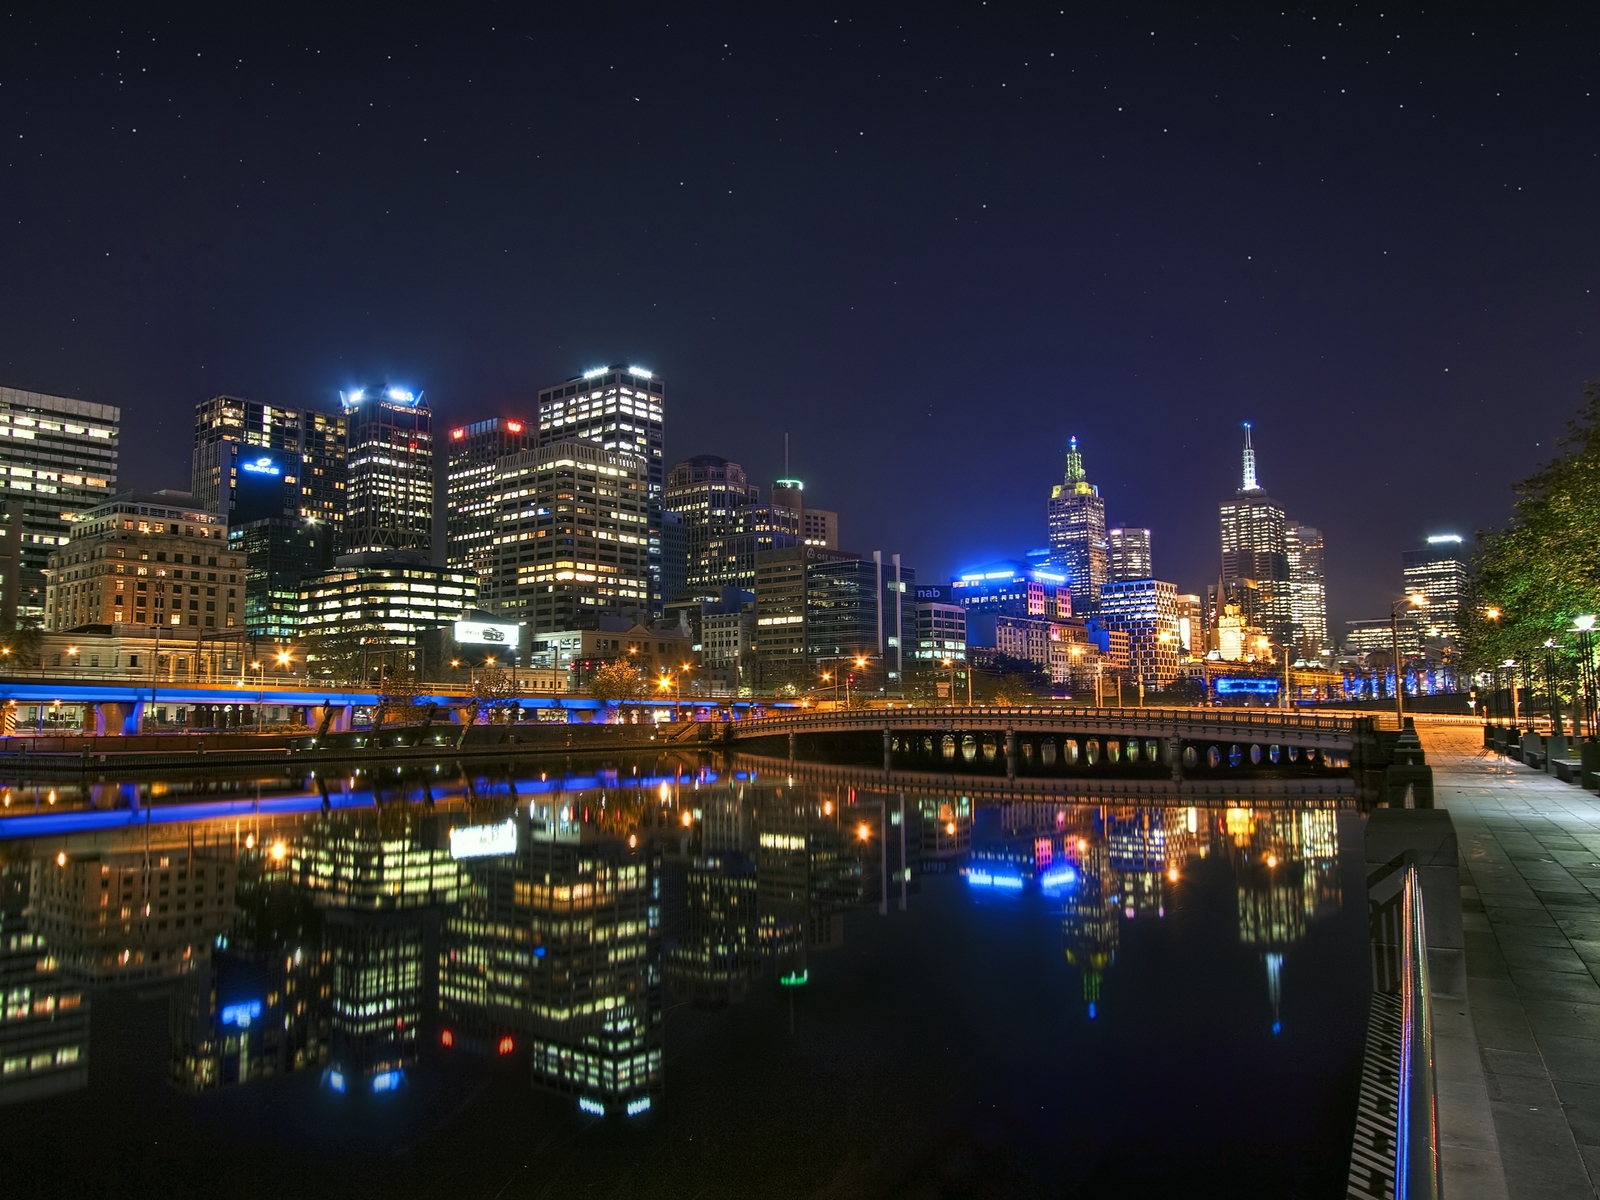 Melbourne Night Landscape for 1600 x 1200 resolution